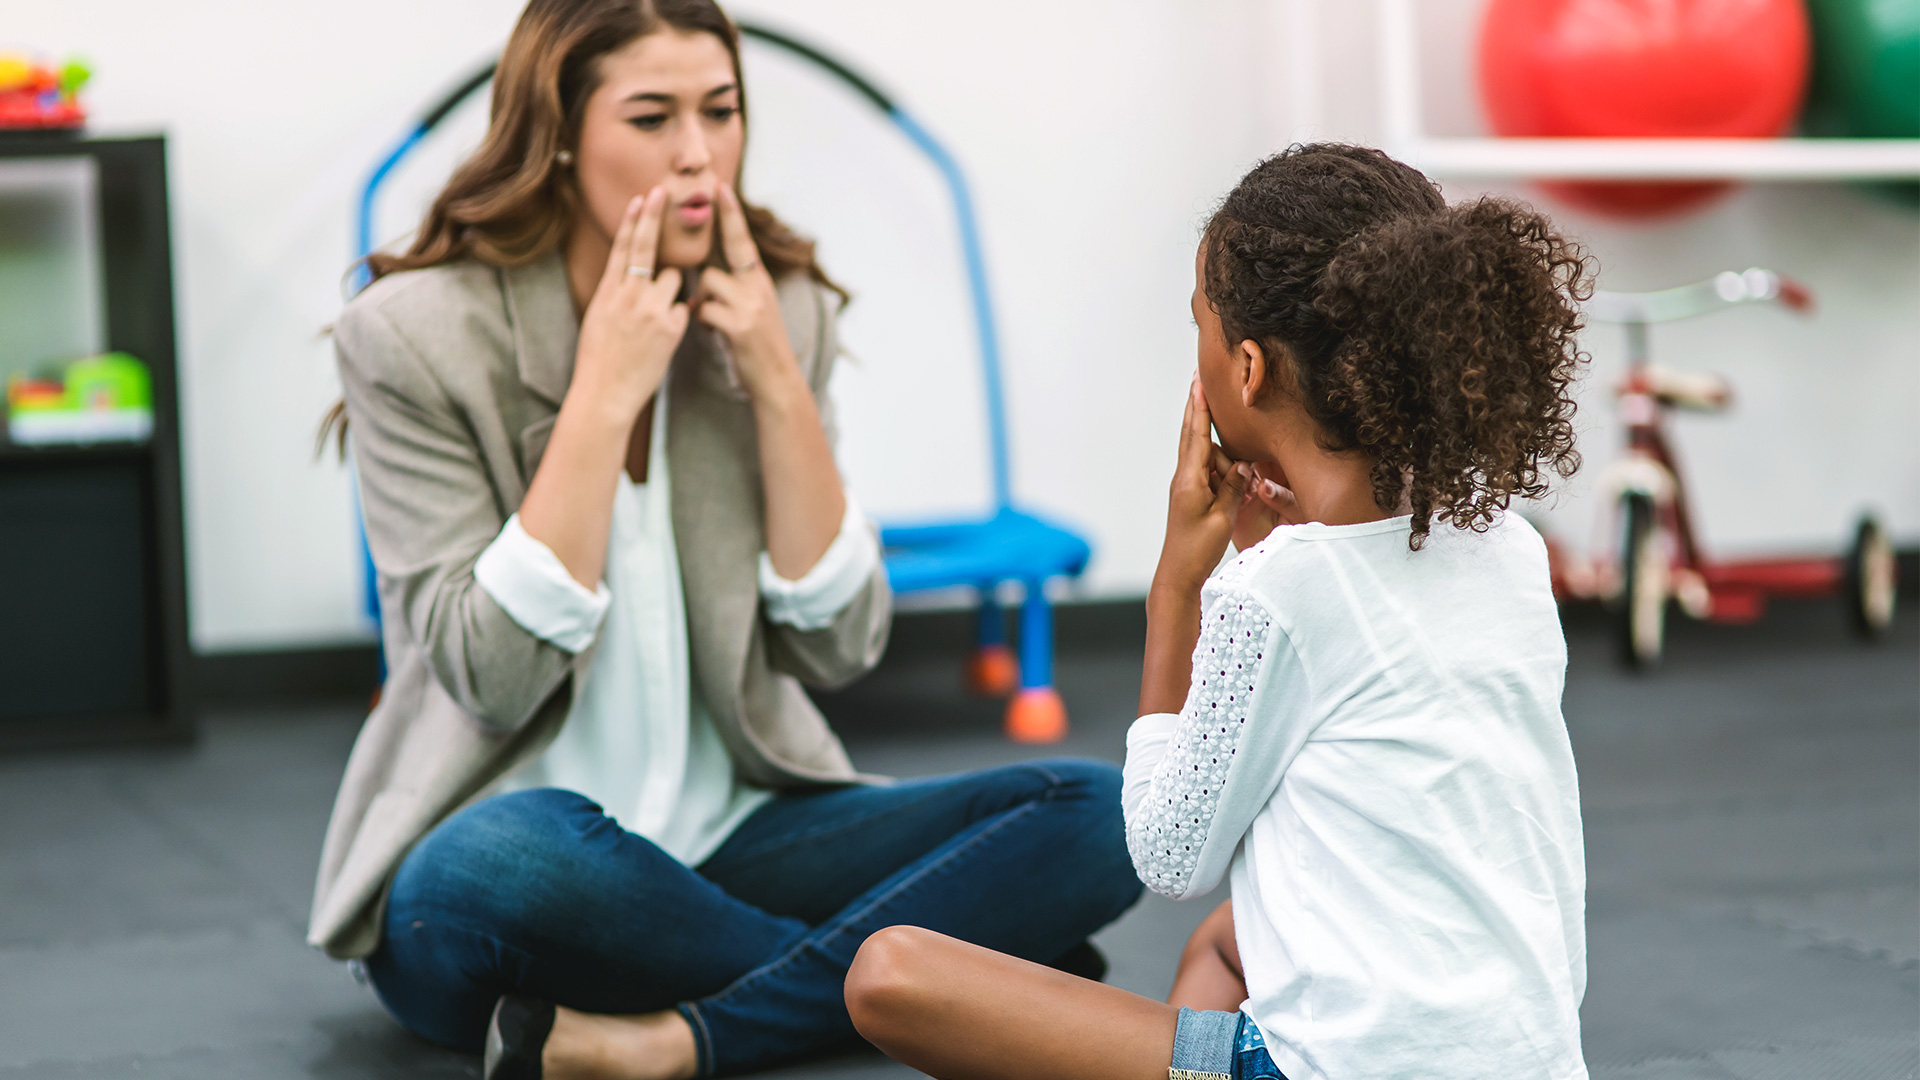 5 Ways Speech Therapy Can Help Your Child’s Speech Development